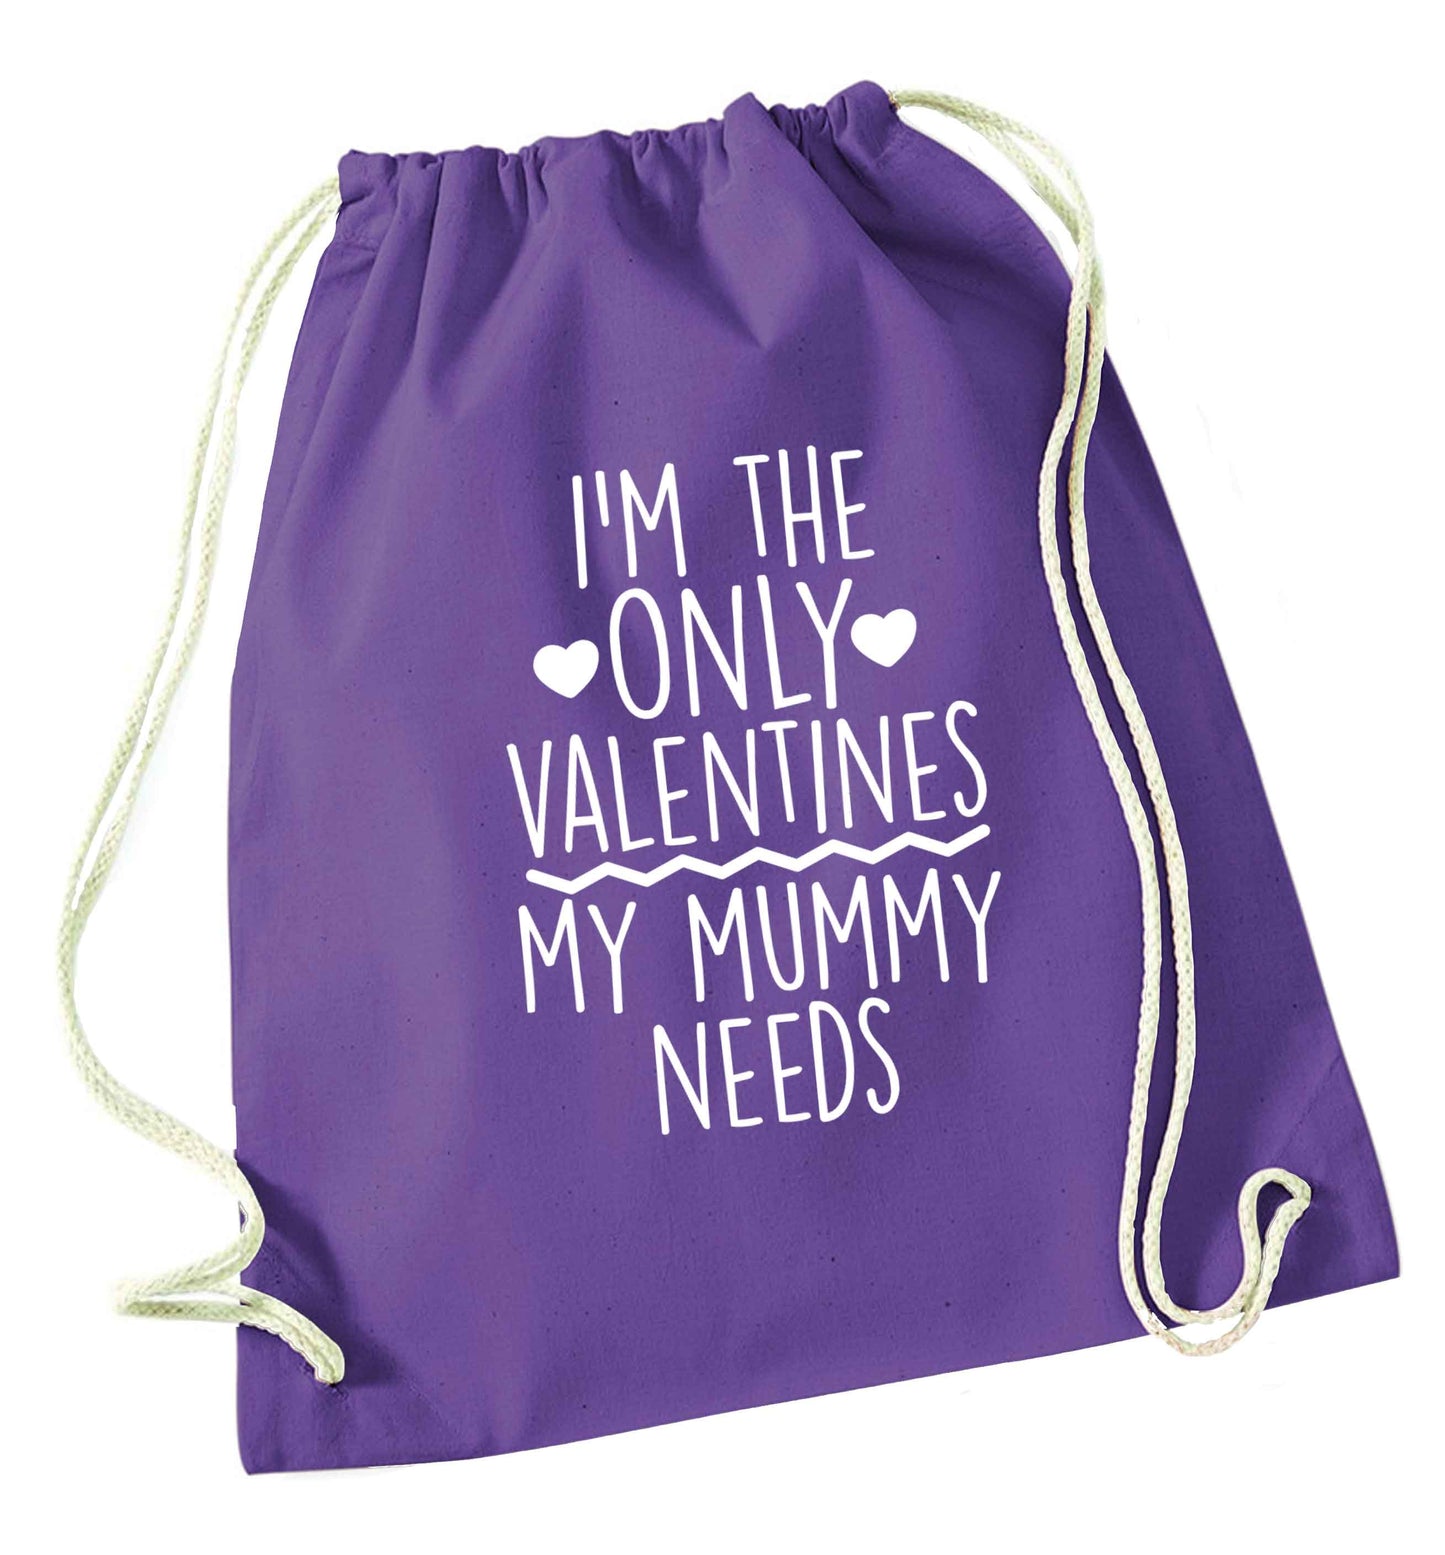 I'm the only valentines my mummy needs purple drawstring bag